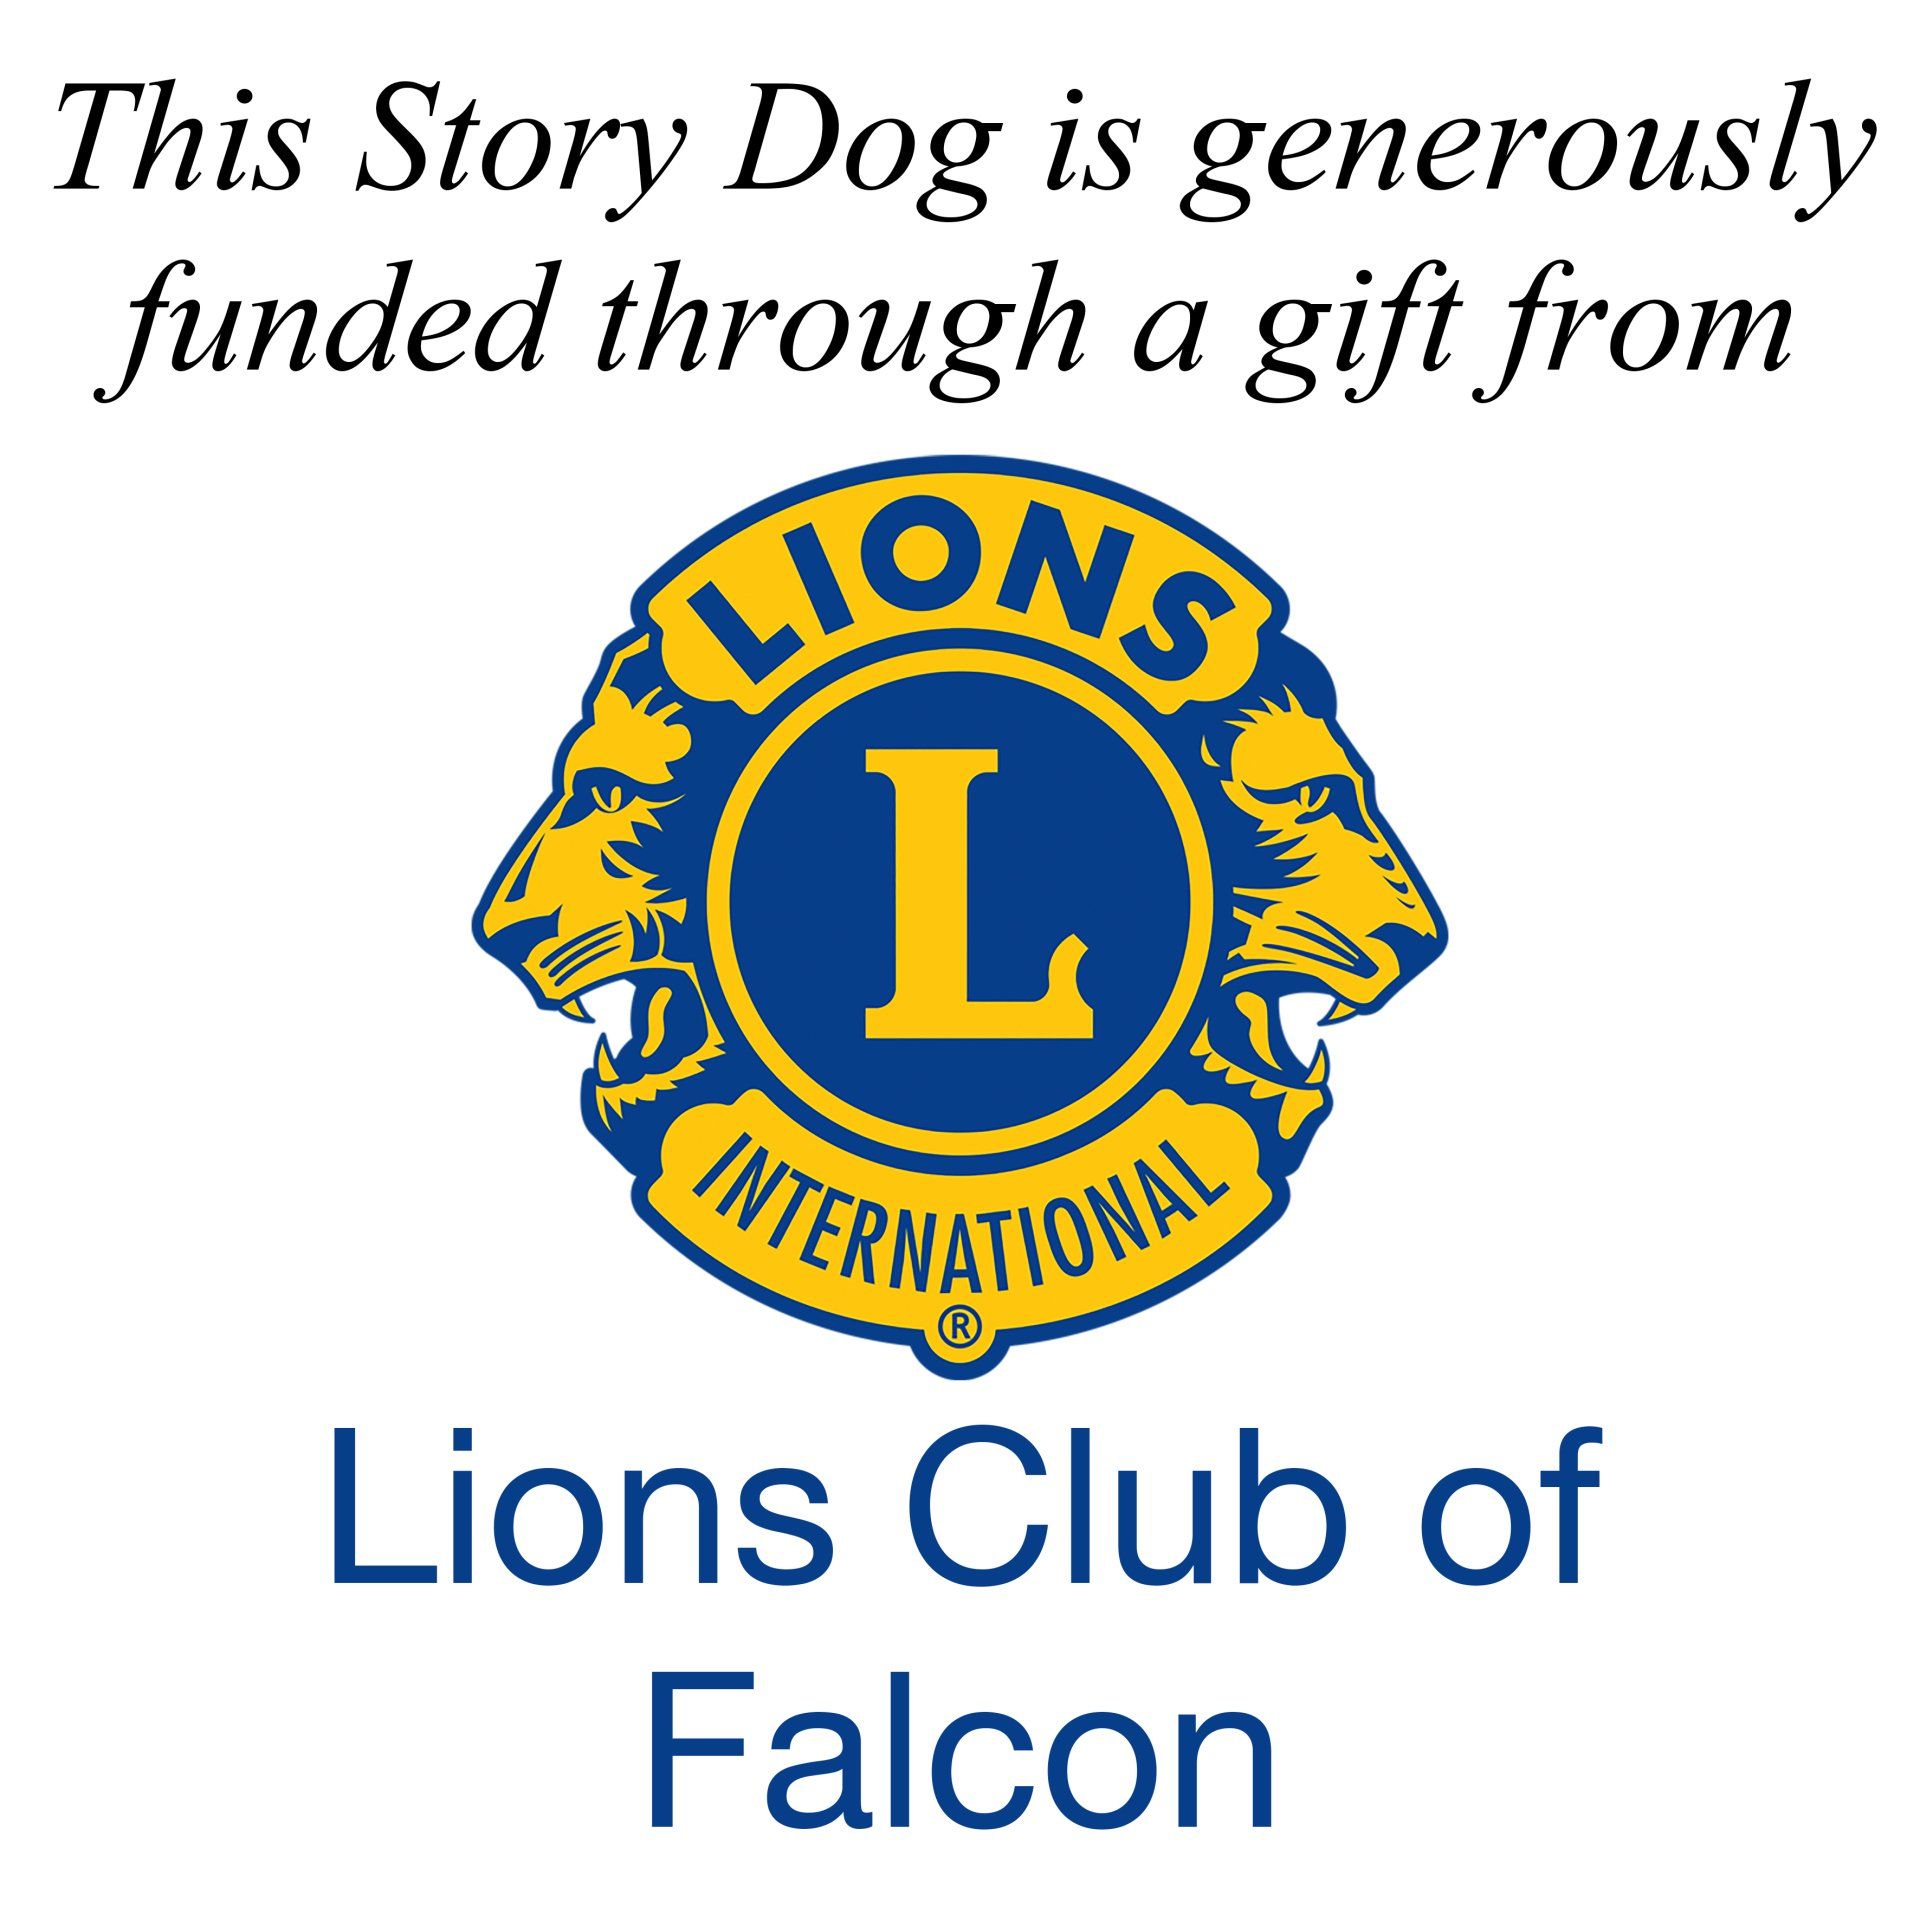 Lions Club of Falcon